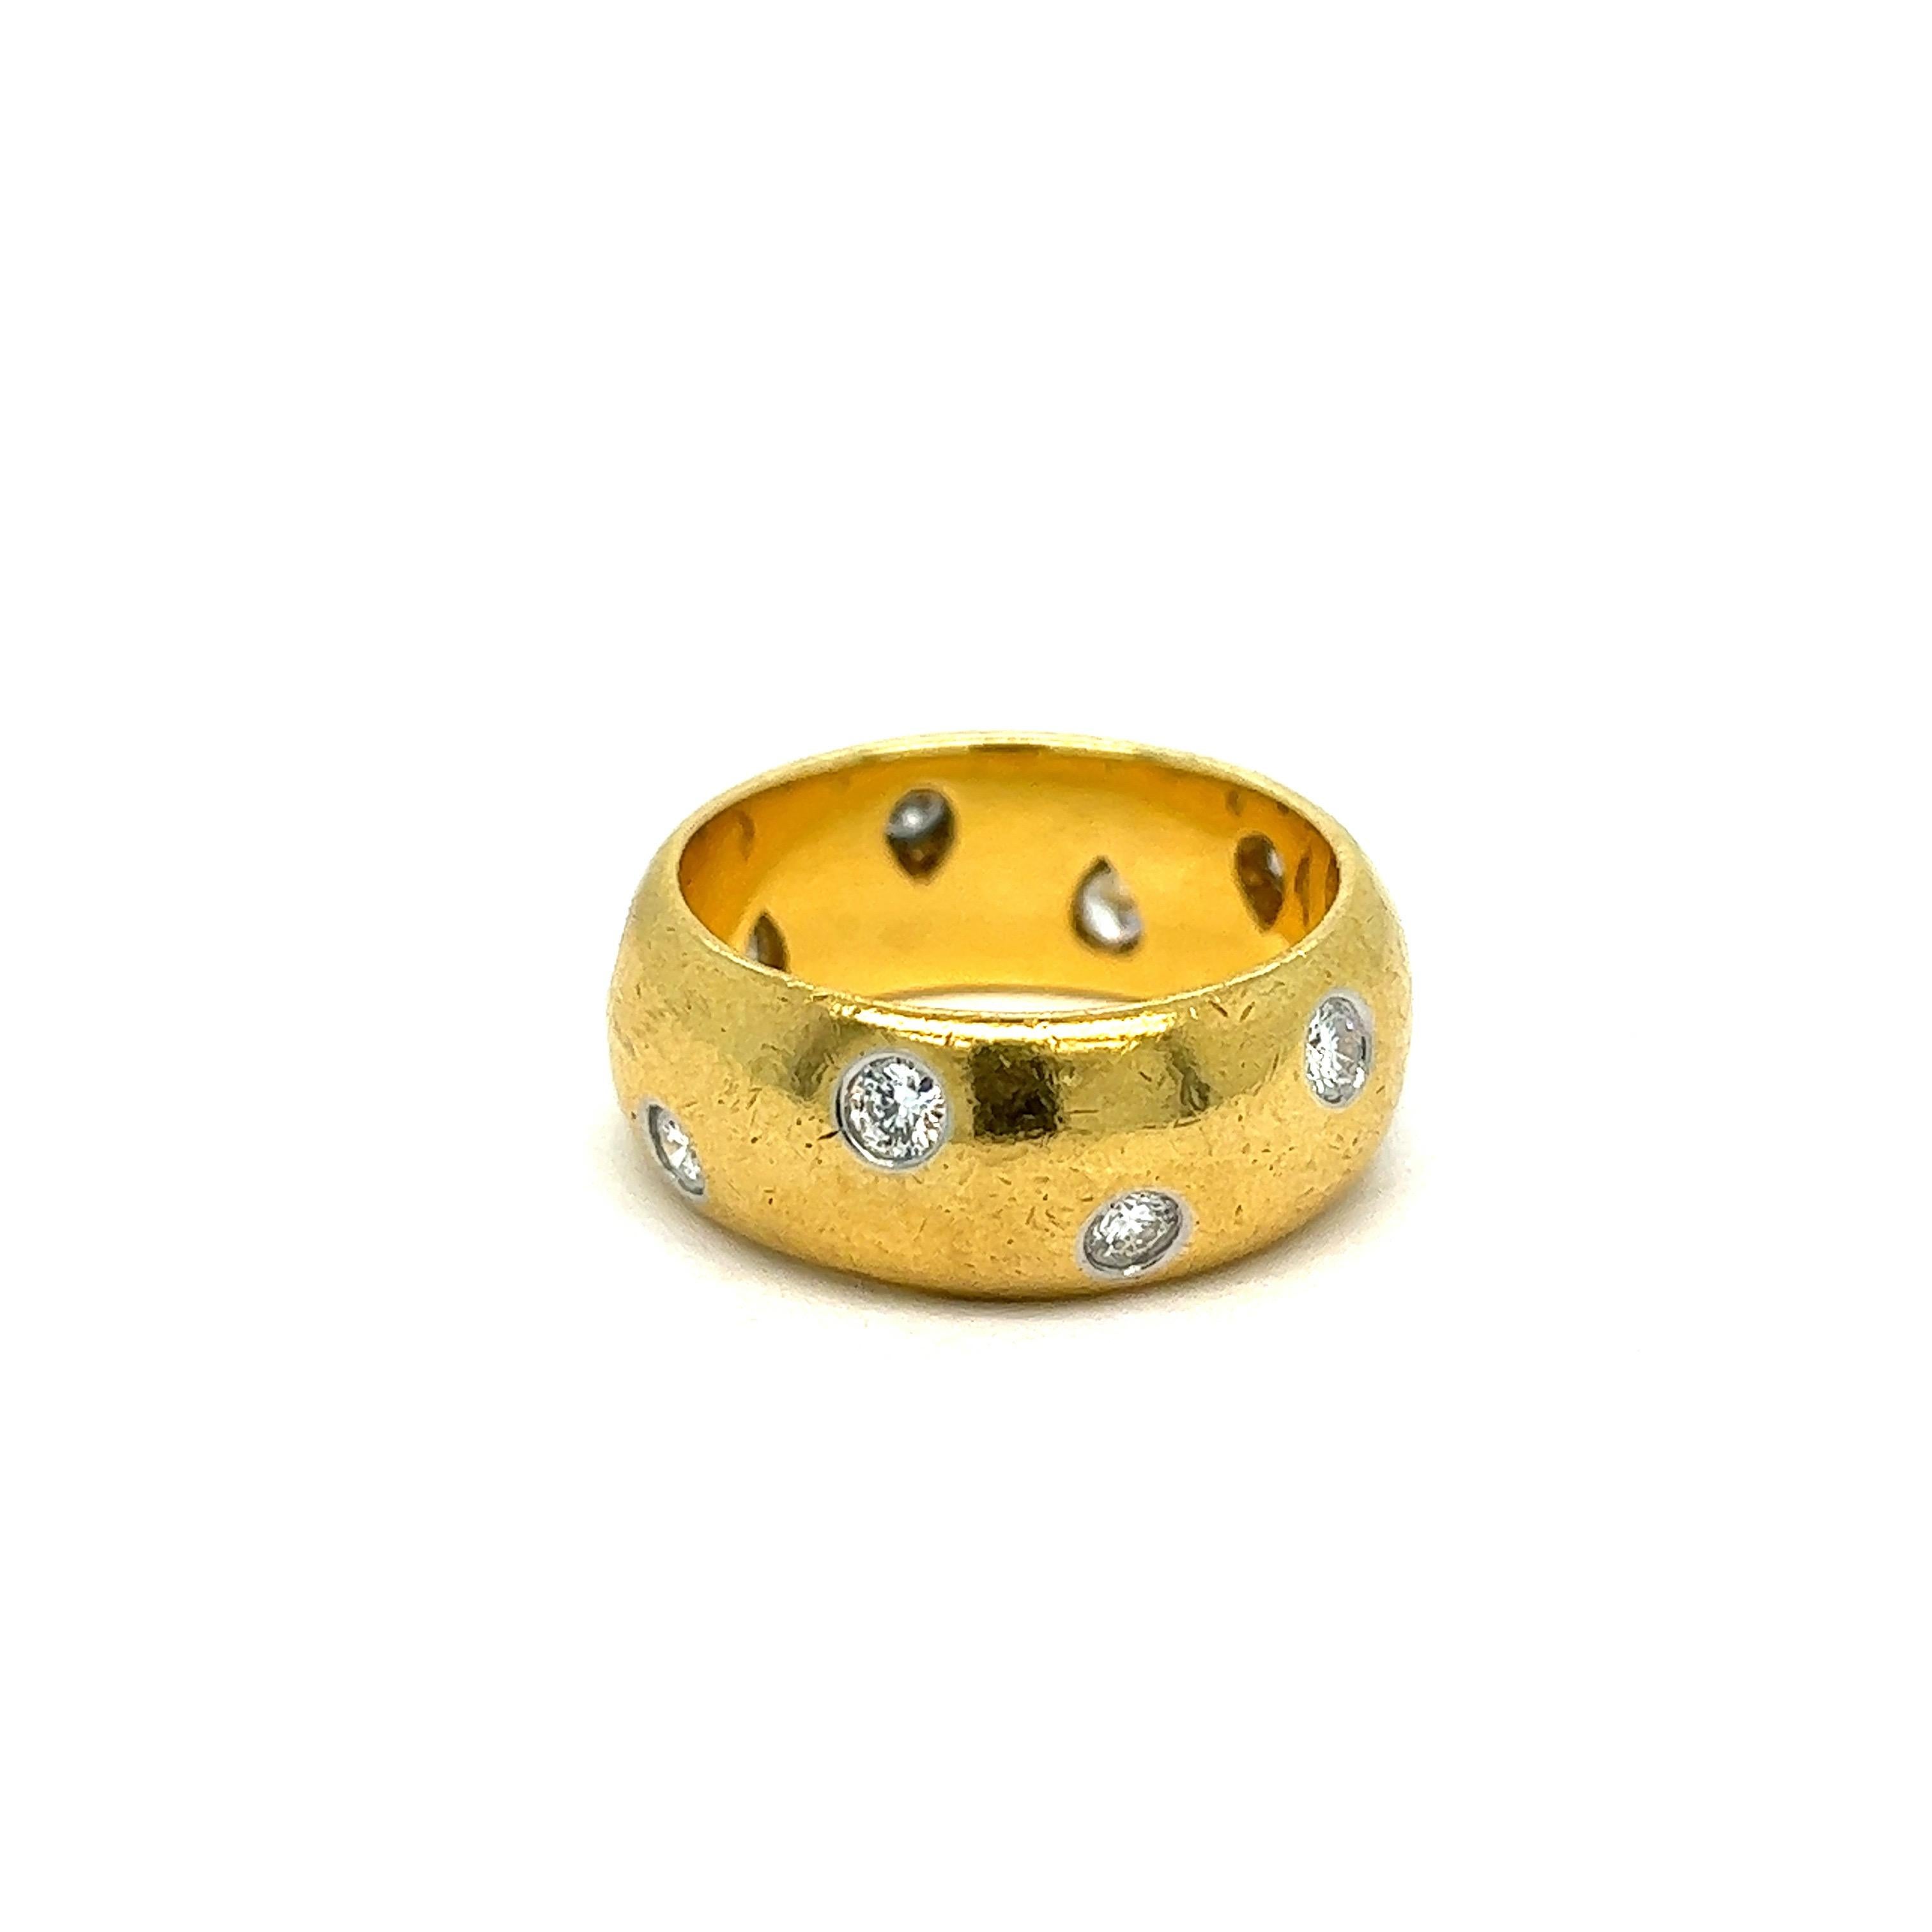 Tiffany & Co. diamond gold platinum band ring 

Round-cut diamonds, 18 karat yellow gold; marked Tiffany & Co., 750, Pt 950

Size: 6 US
Total weight: 10.8 grams